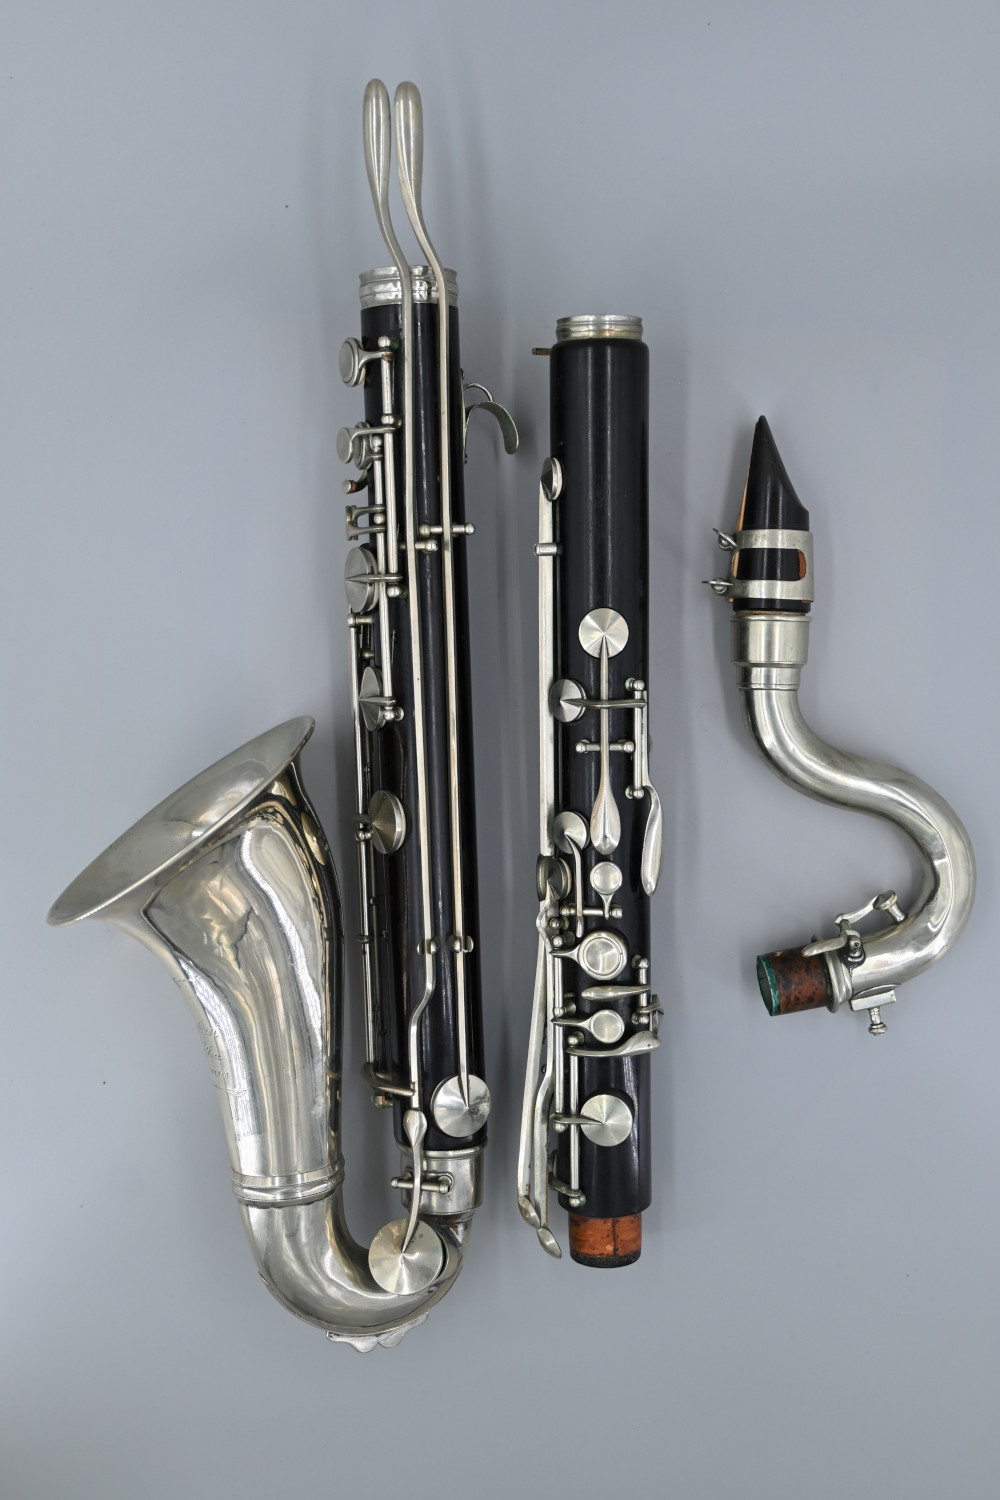 Bass-clarinet-vm-collectables2